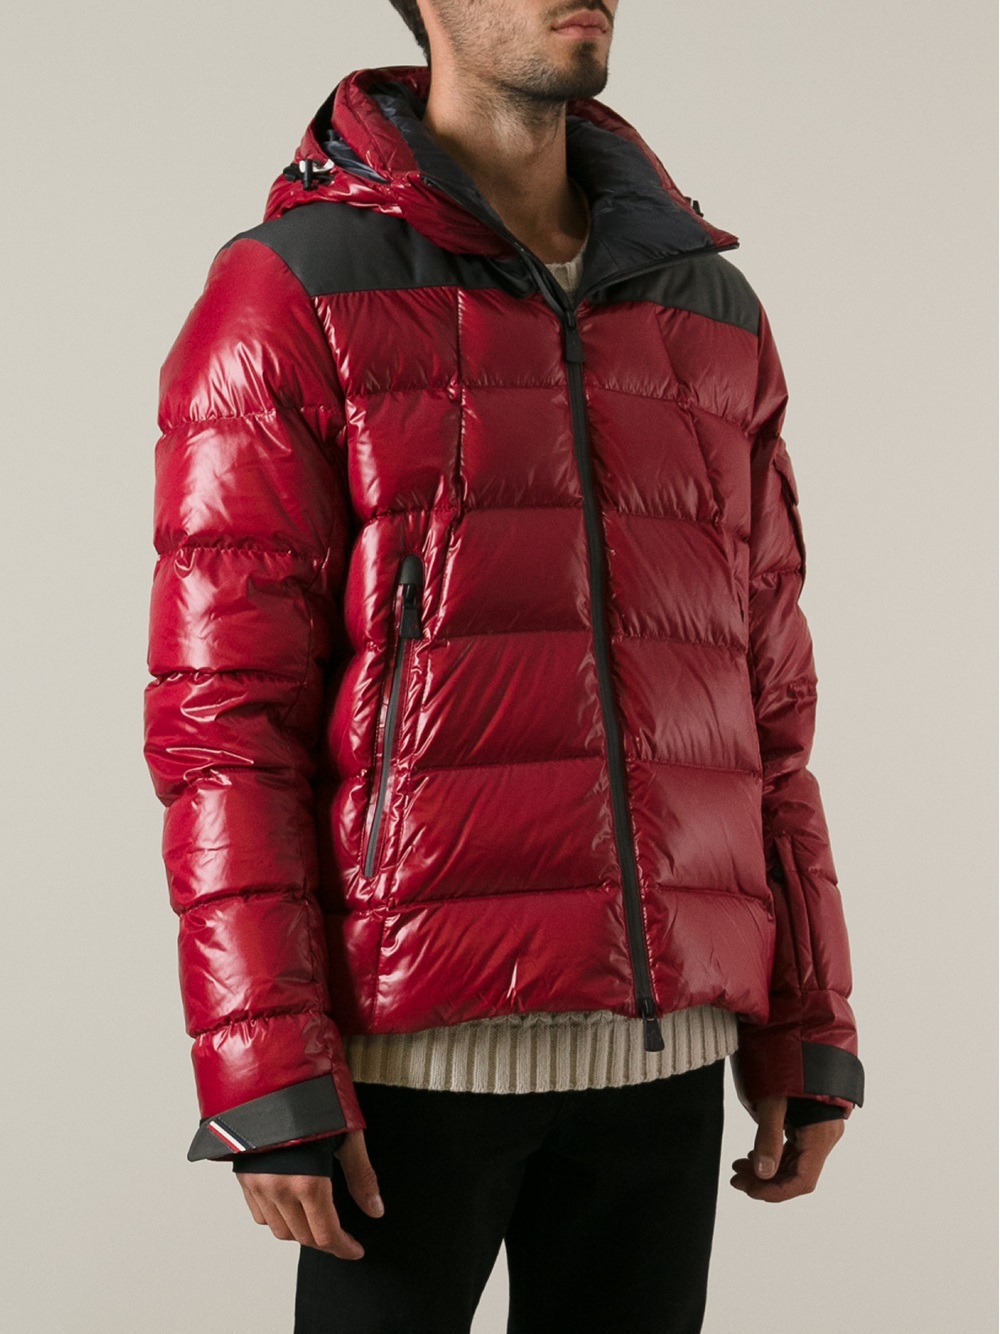 3 MONCLER GRENOBLE Puffer Jacket in Red for Men - Lyst